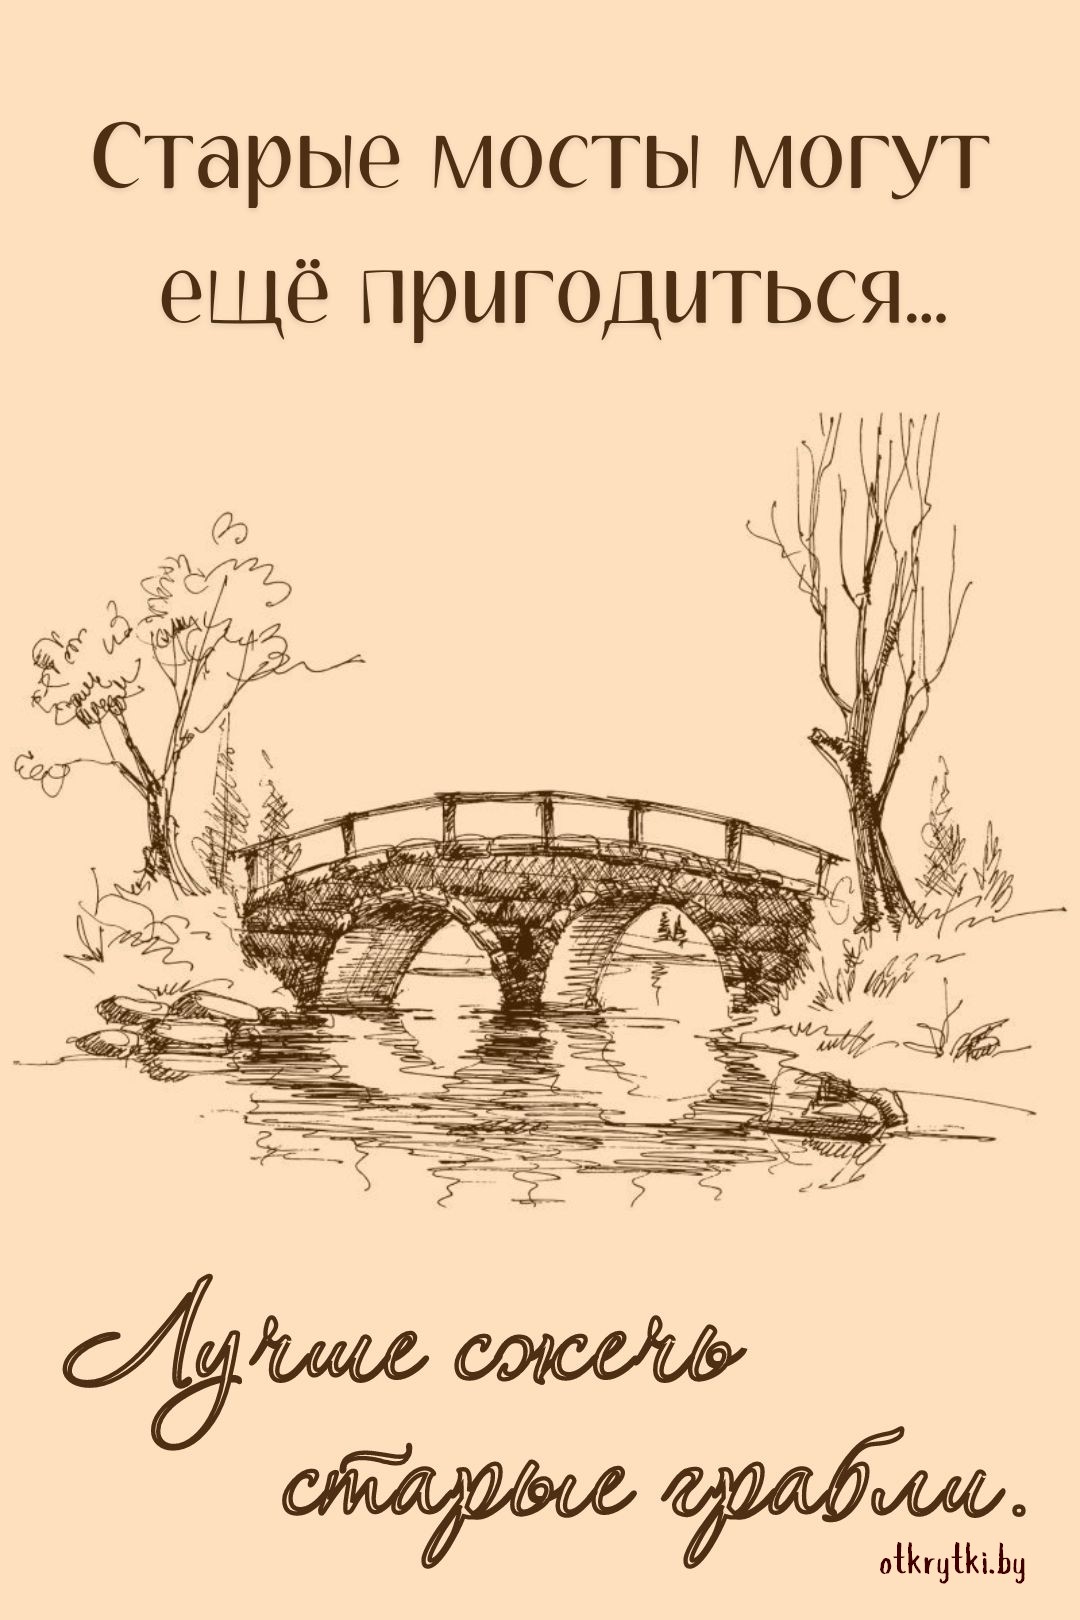 Картинка про старые мосты